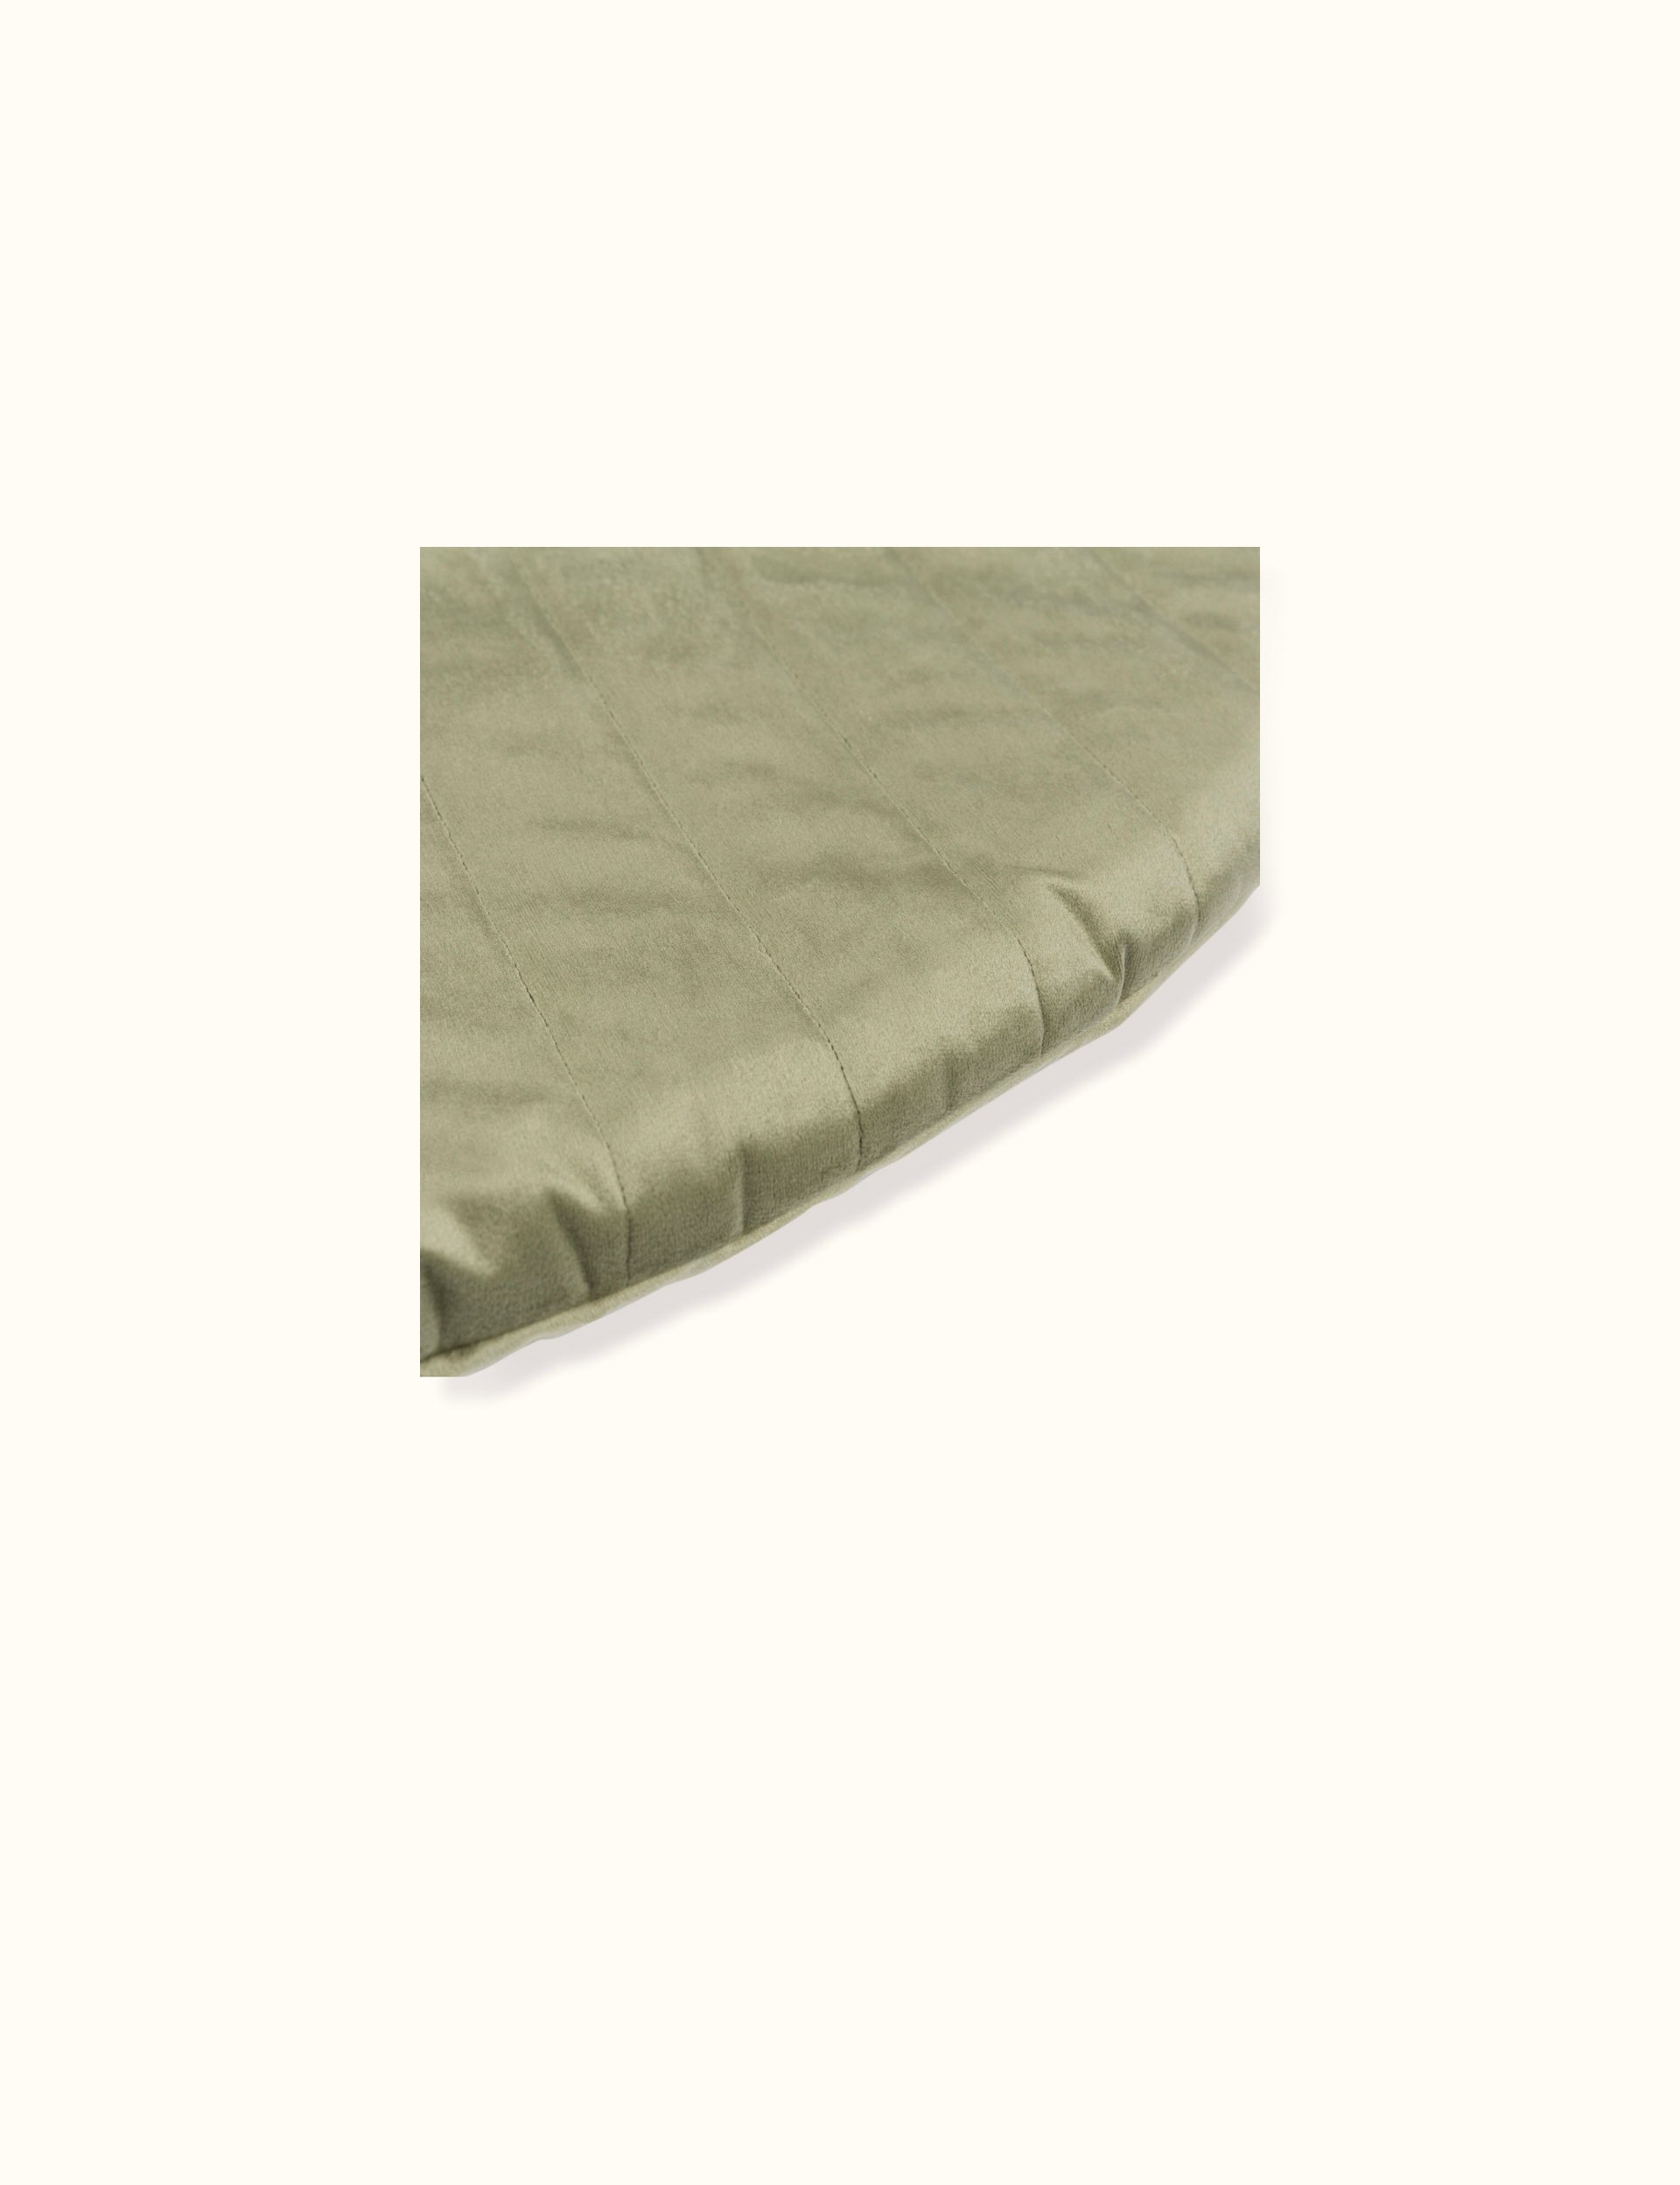 Kilimanjaro Velvet Carpet Playmat - Olive Green